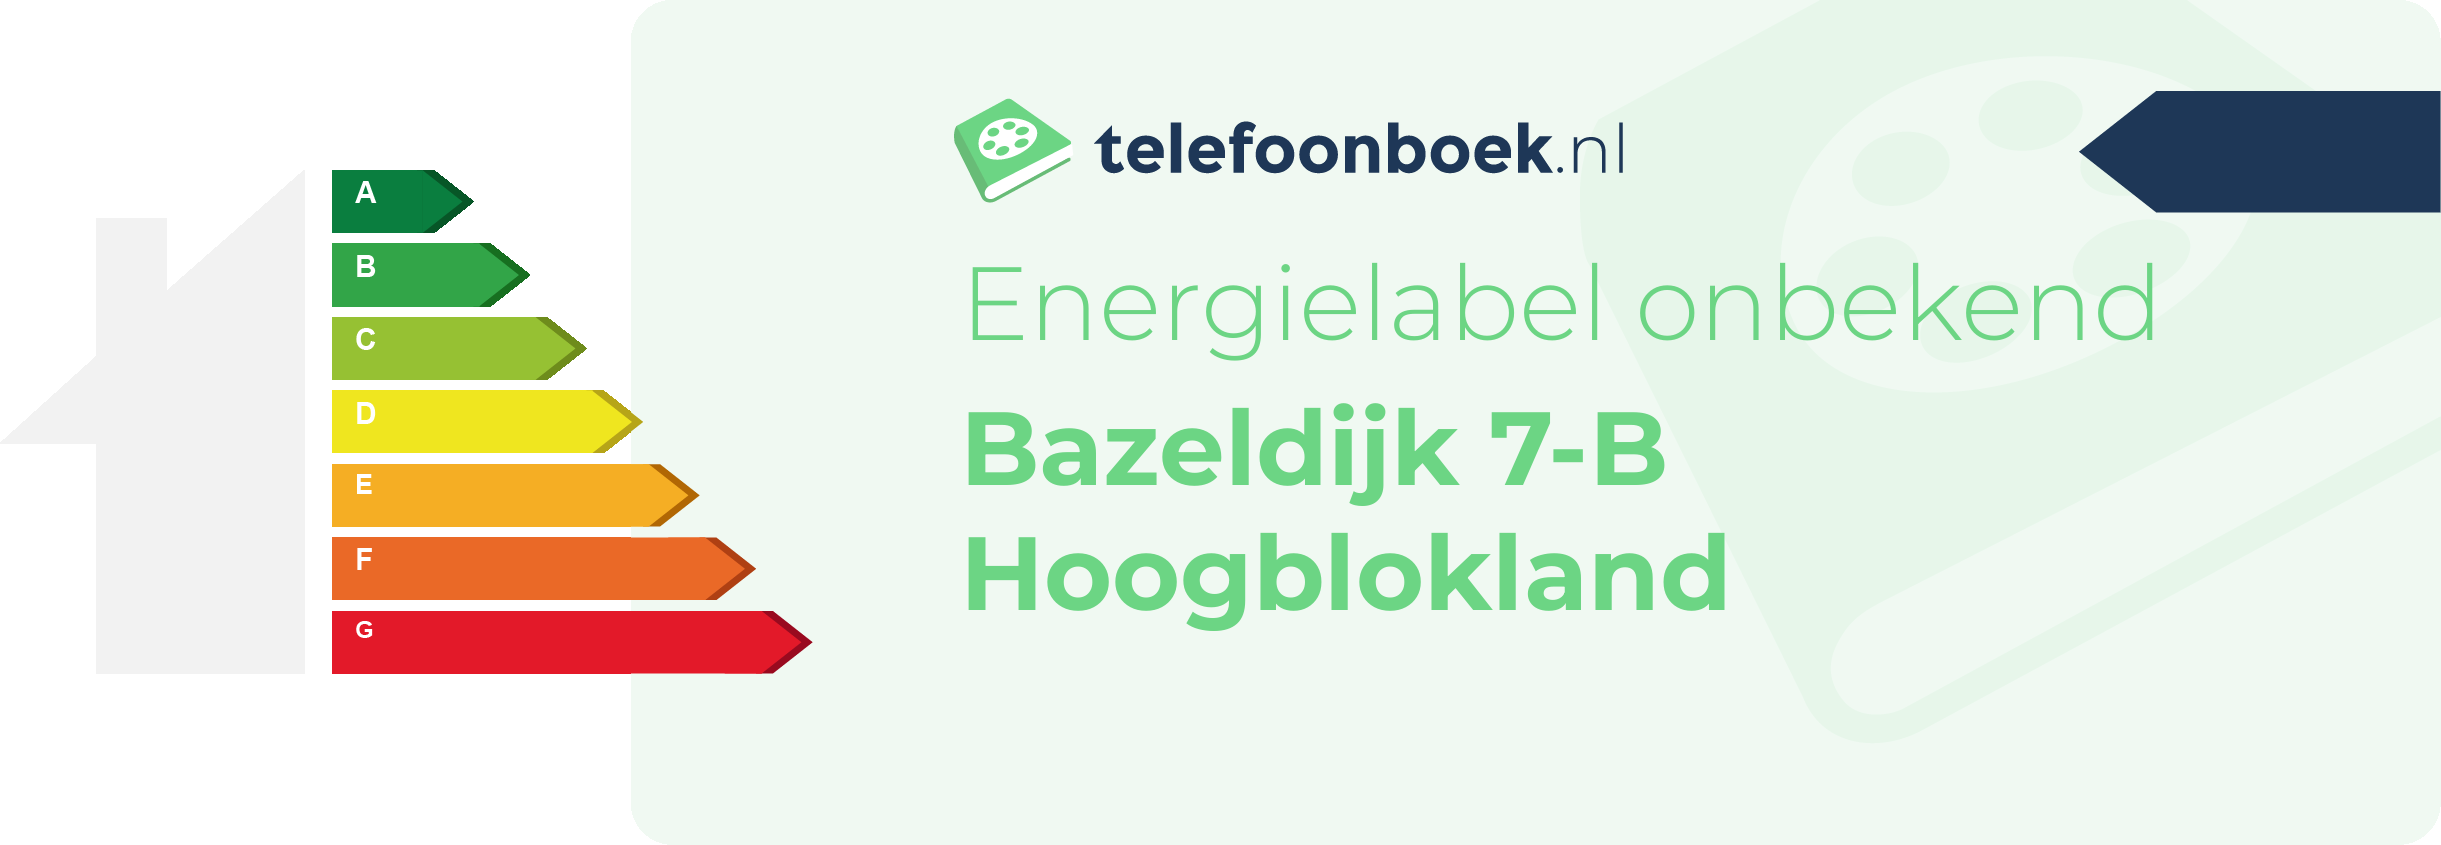 Energielabel Bazeldijk 7-B Hoogblokland